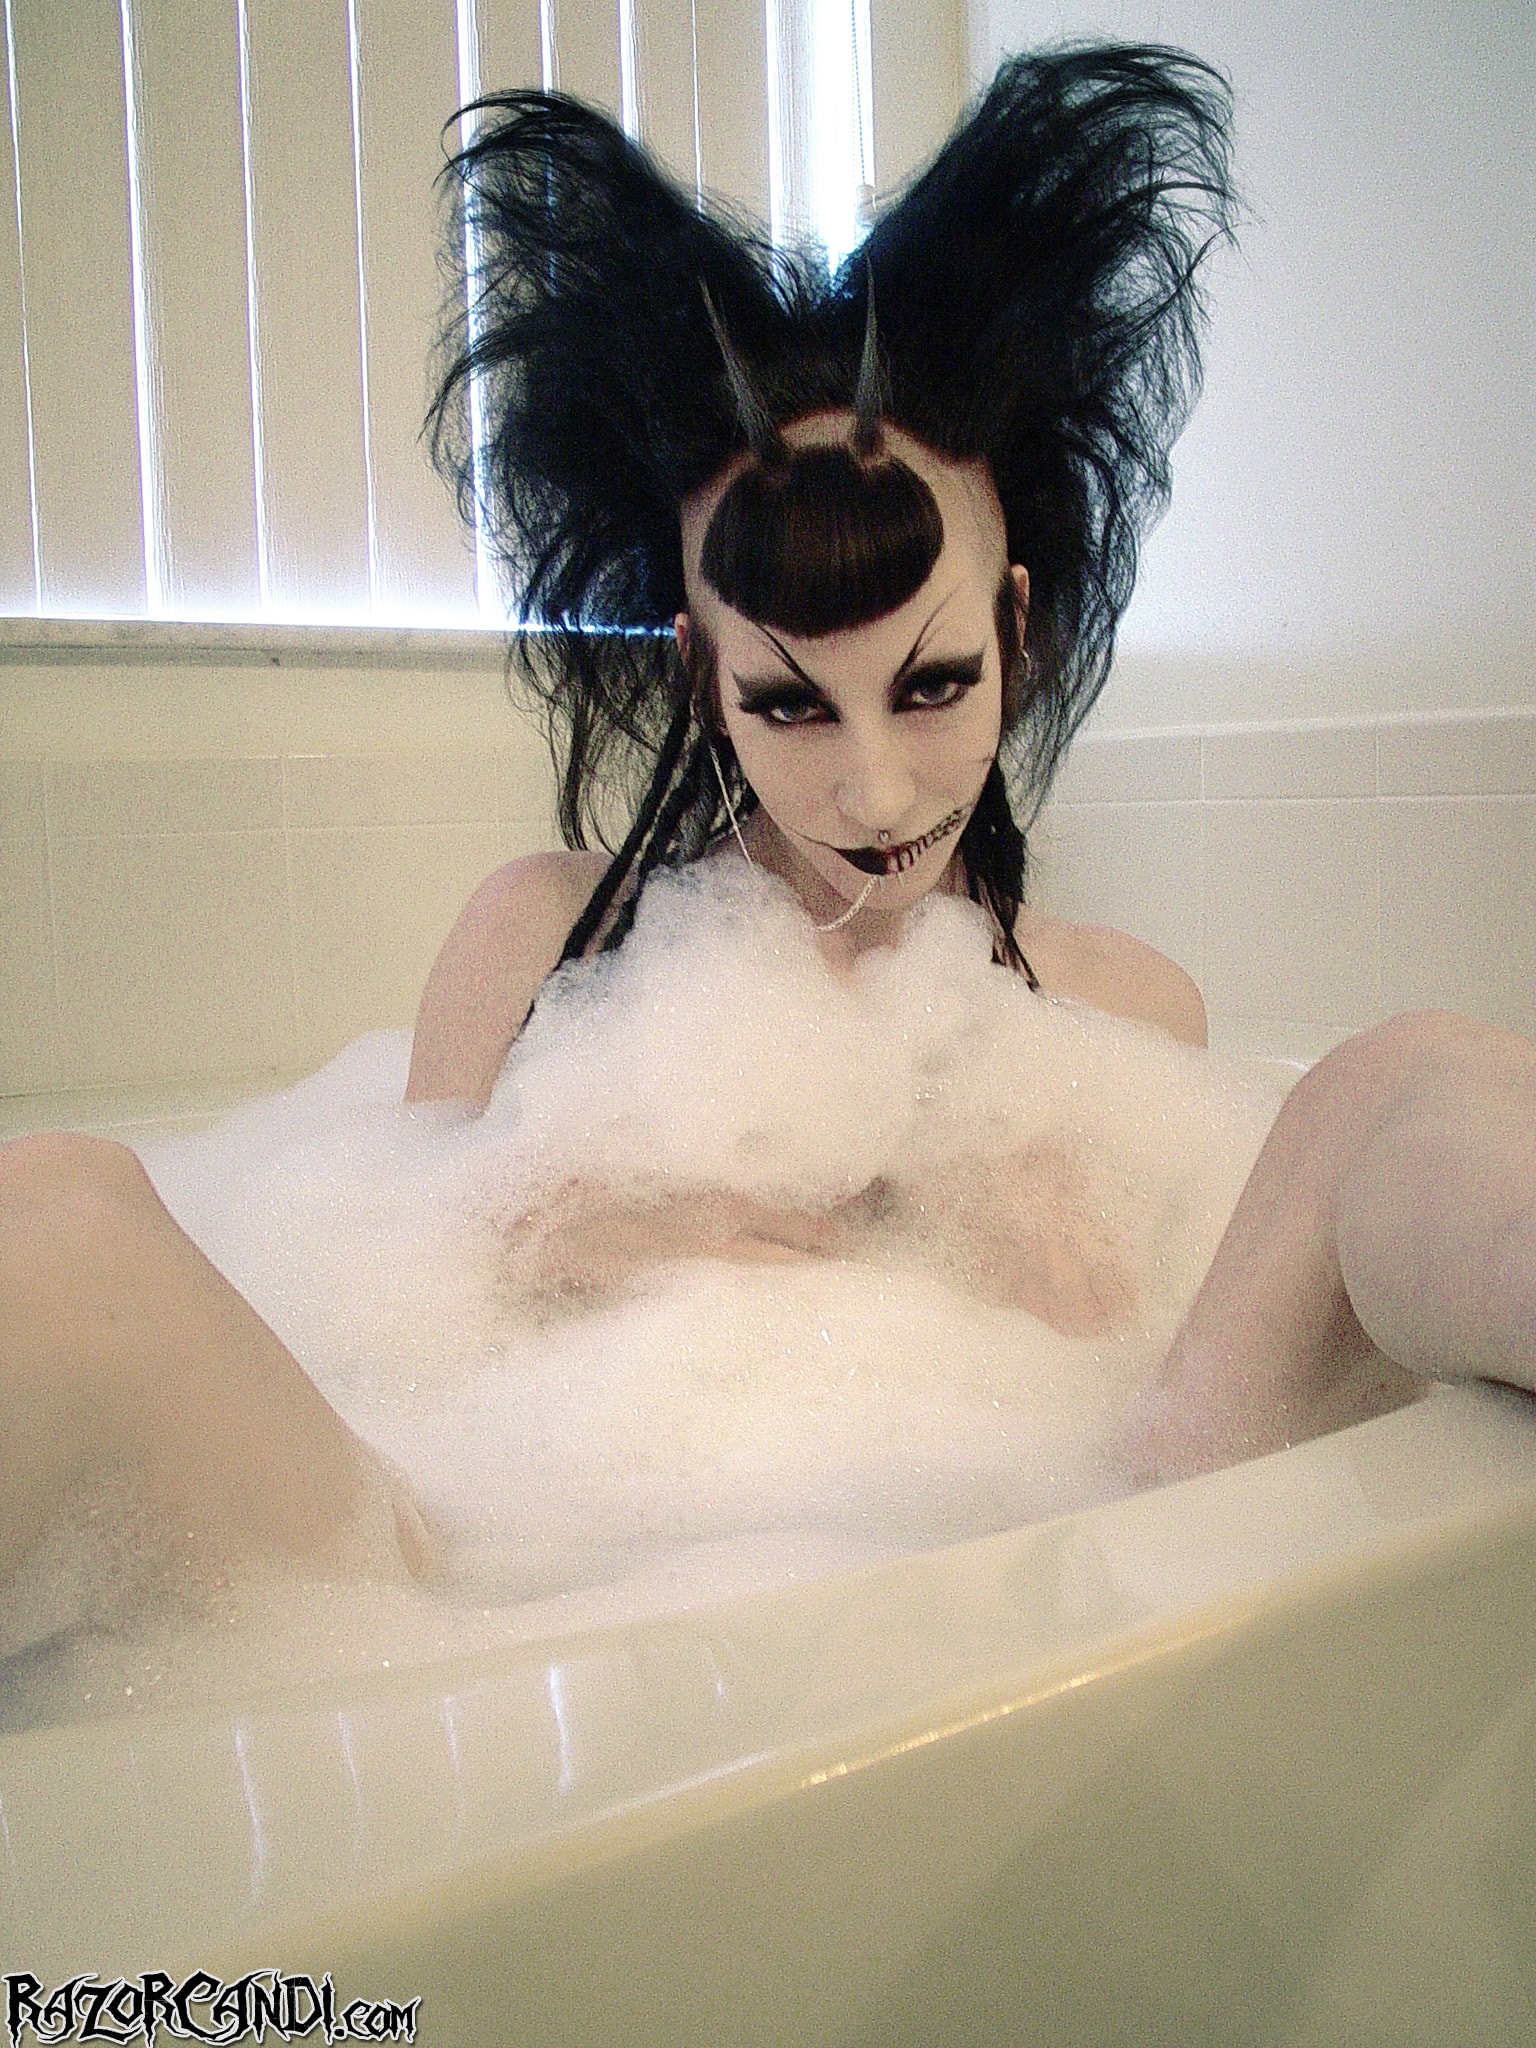 Razor Candi 'Classic Gothic Deathrock Beauty in Bubble Bath' starring Razor Candi (Photo 6)